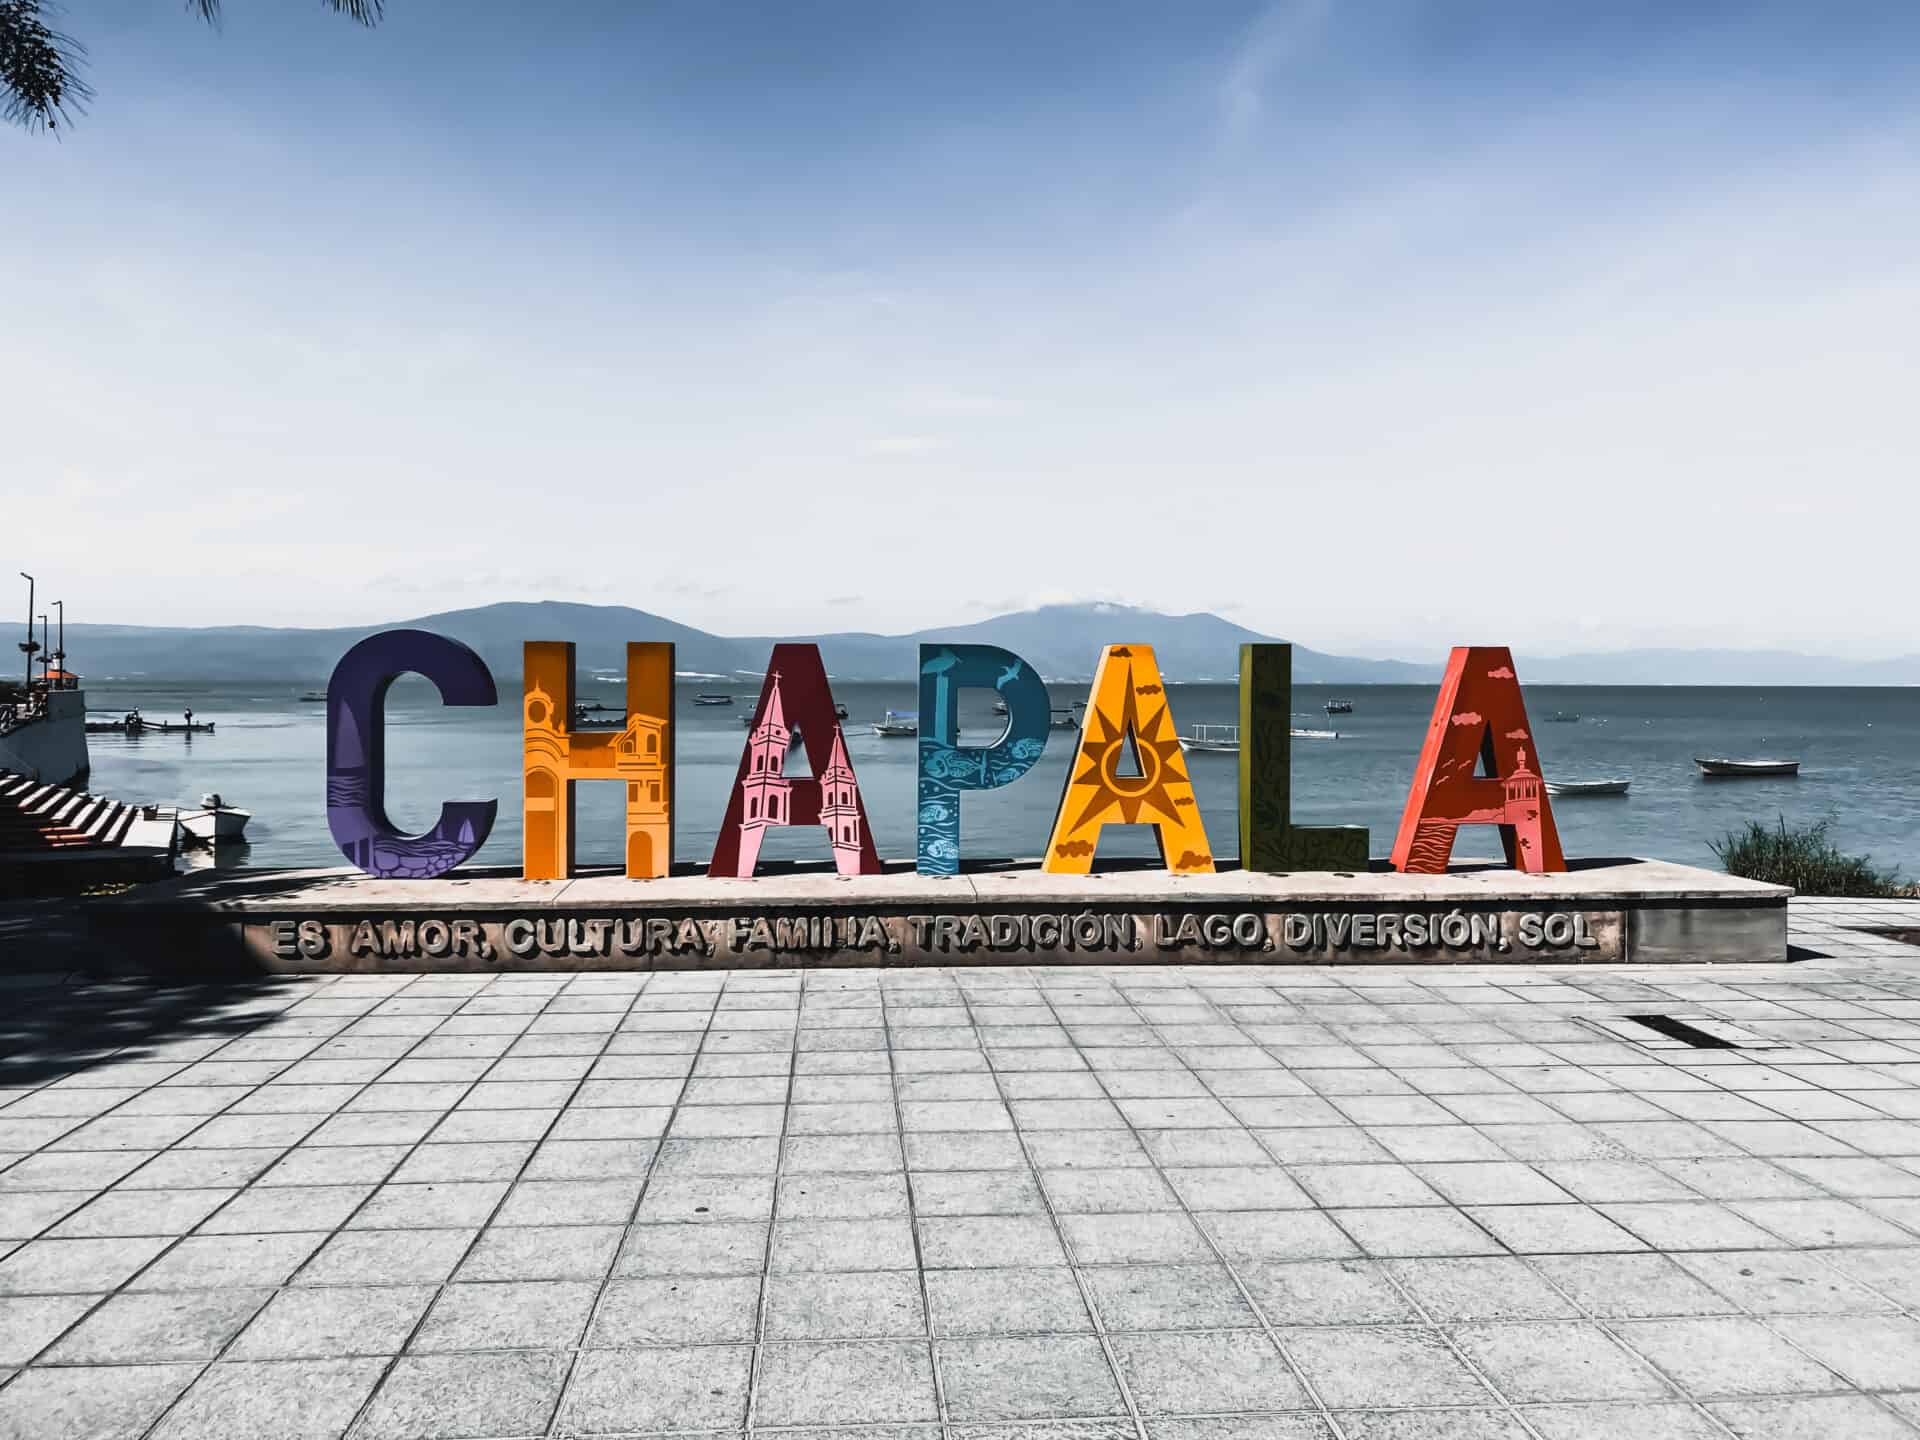 Mexico Pueblo Magico sign of Chapala with moody vibe